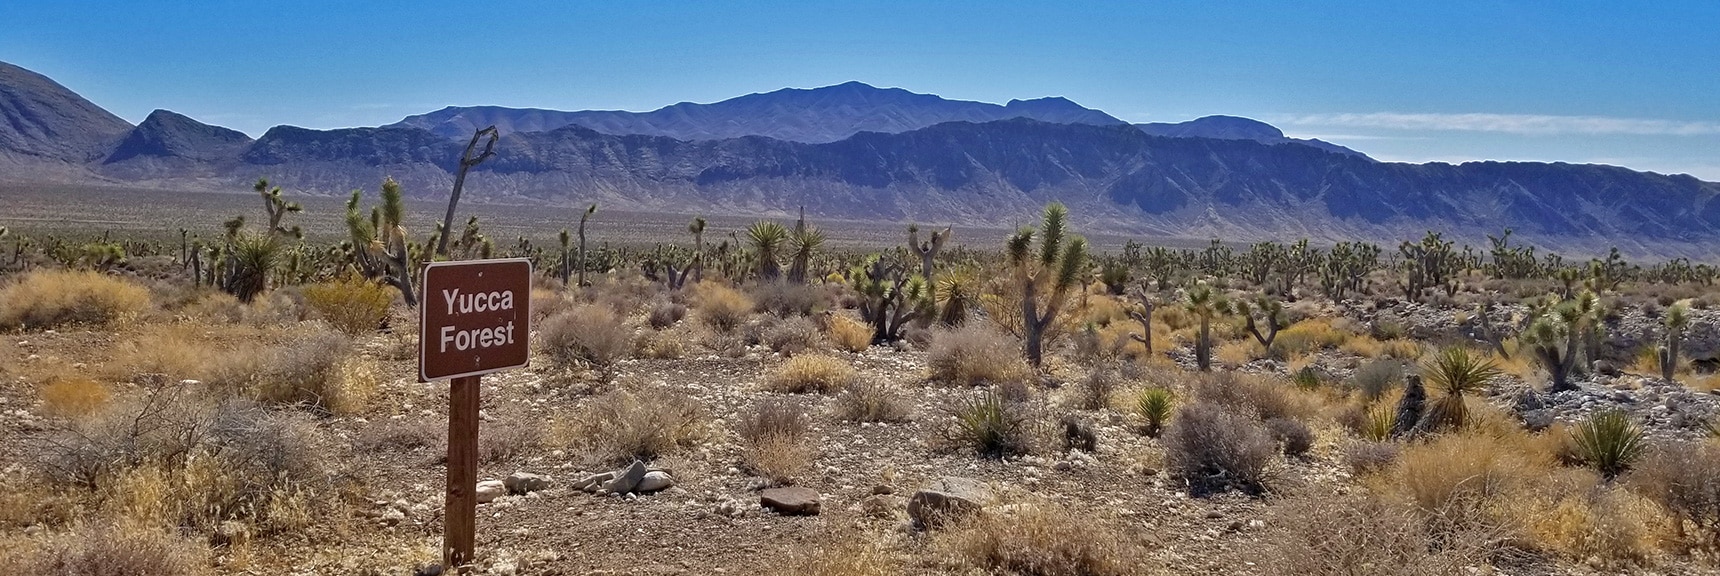 Gass Peak Viewed from Mormon Well Road | Lower Mormon Well Road | Sheep Range, Desert National Wildlife Refuge, Nevada